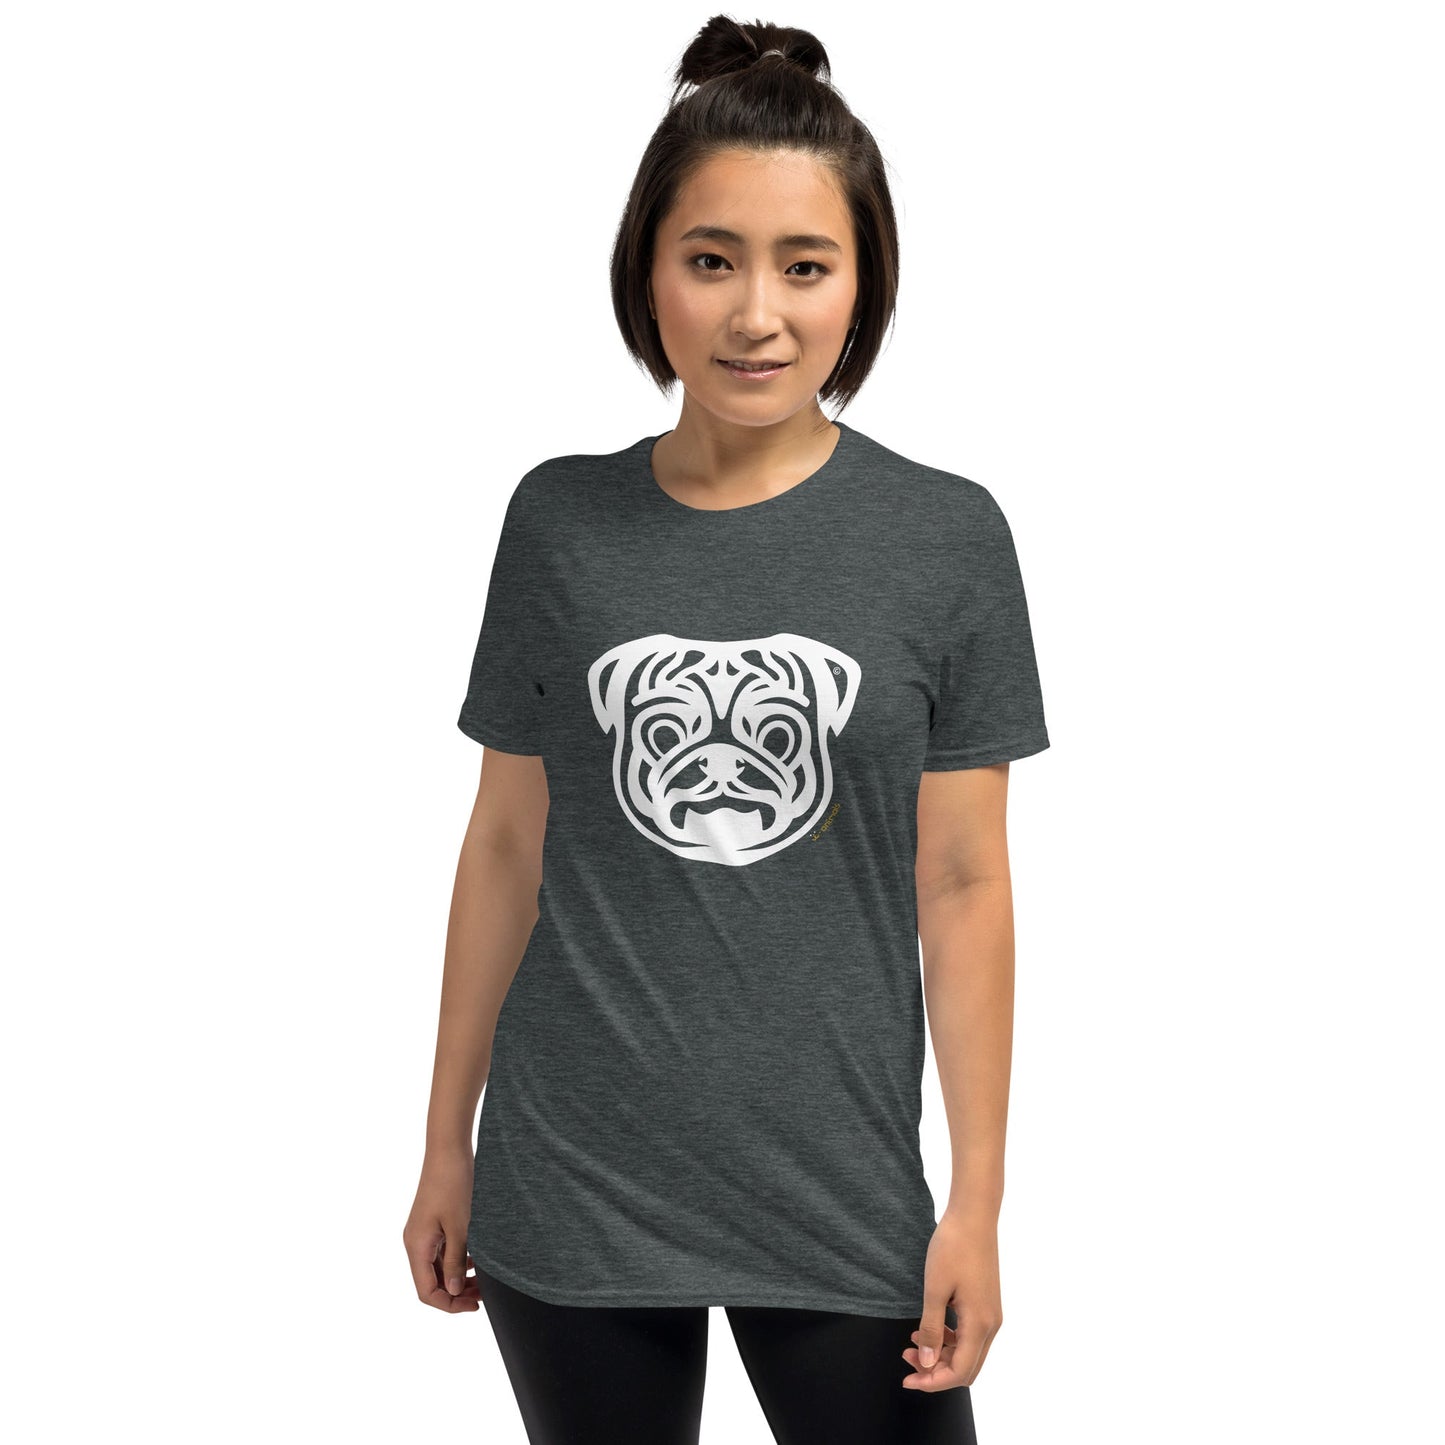 Camiseta unissex de manga curta - Pug - Tribal i-animals